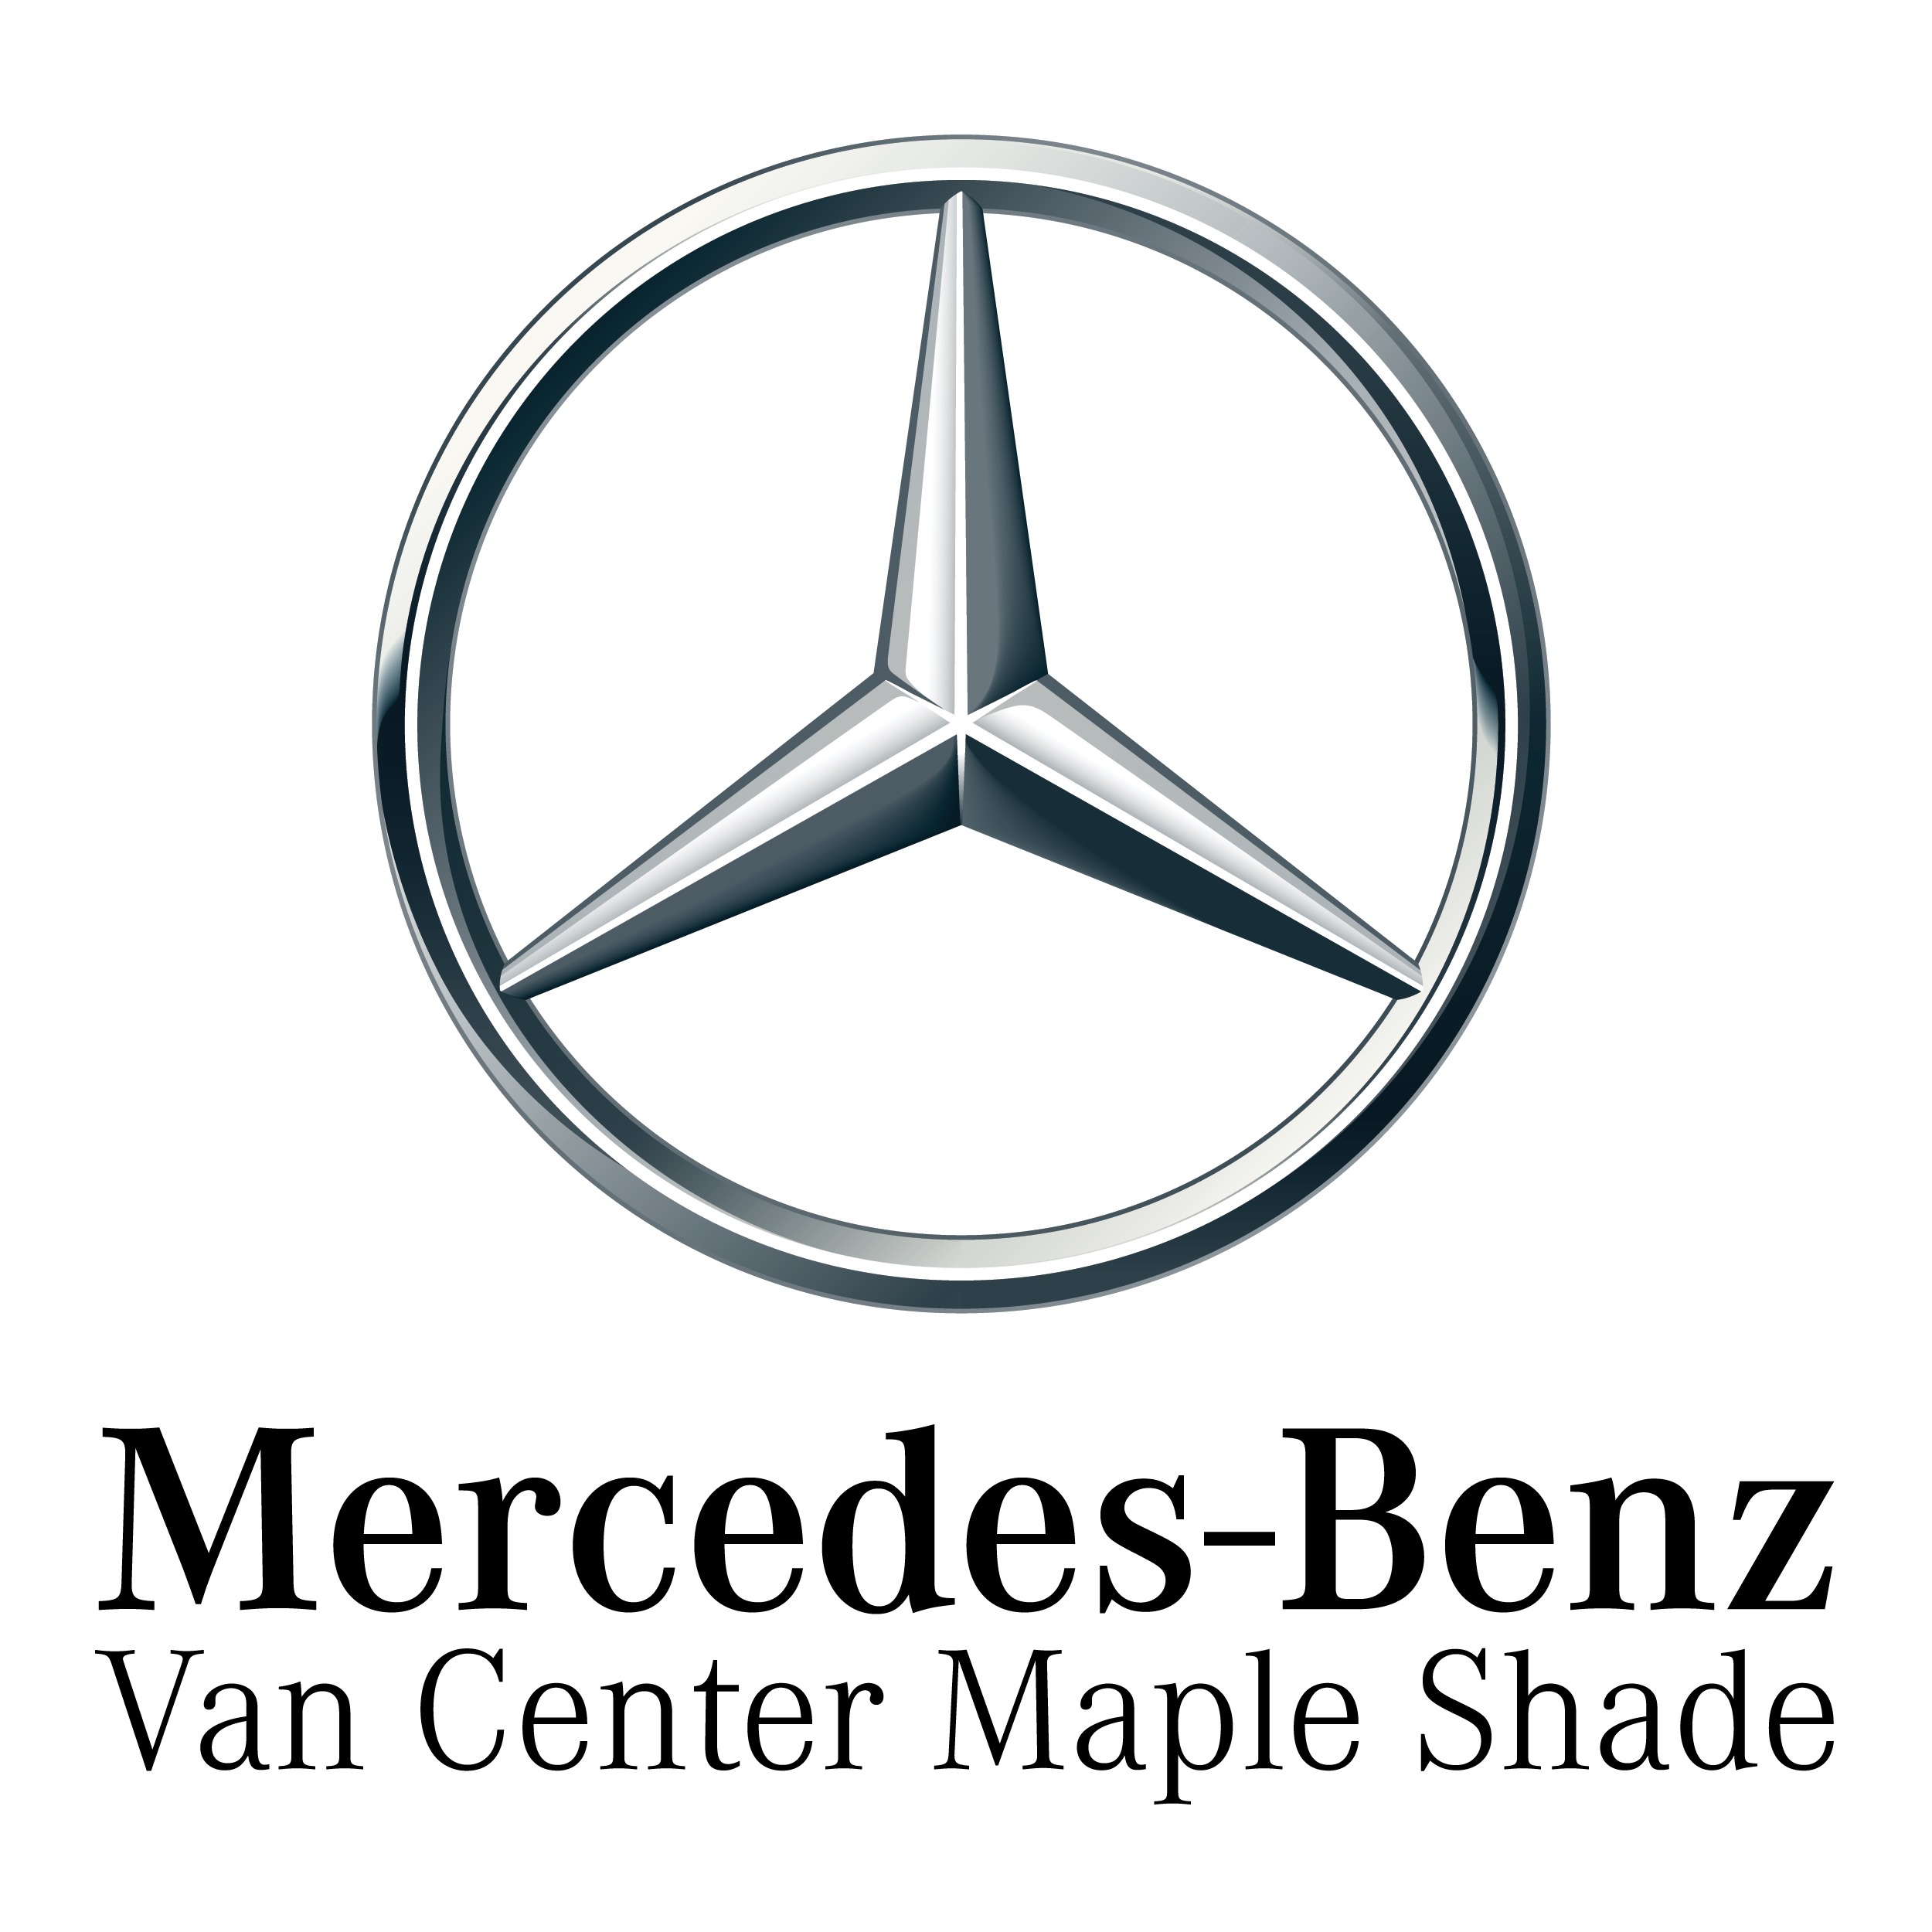 Service Center at Mercedes-Benz Van Center Maple Shade - Maple Shade, NJ 08052 - (856)209-0005 | ShowMeLocal.com